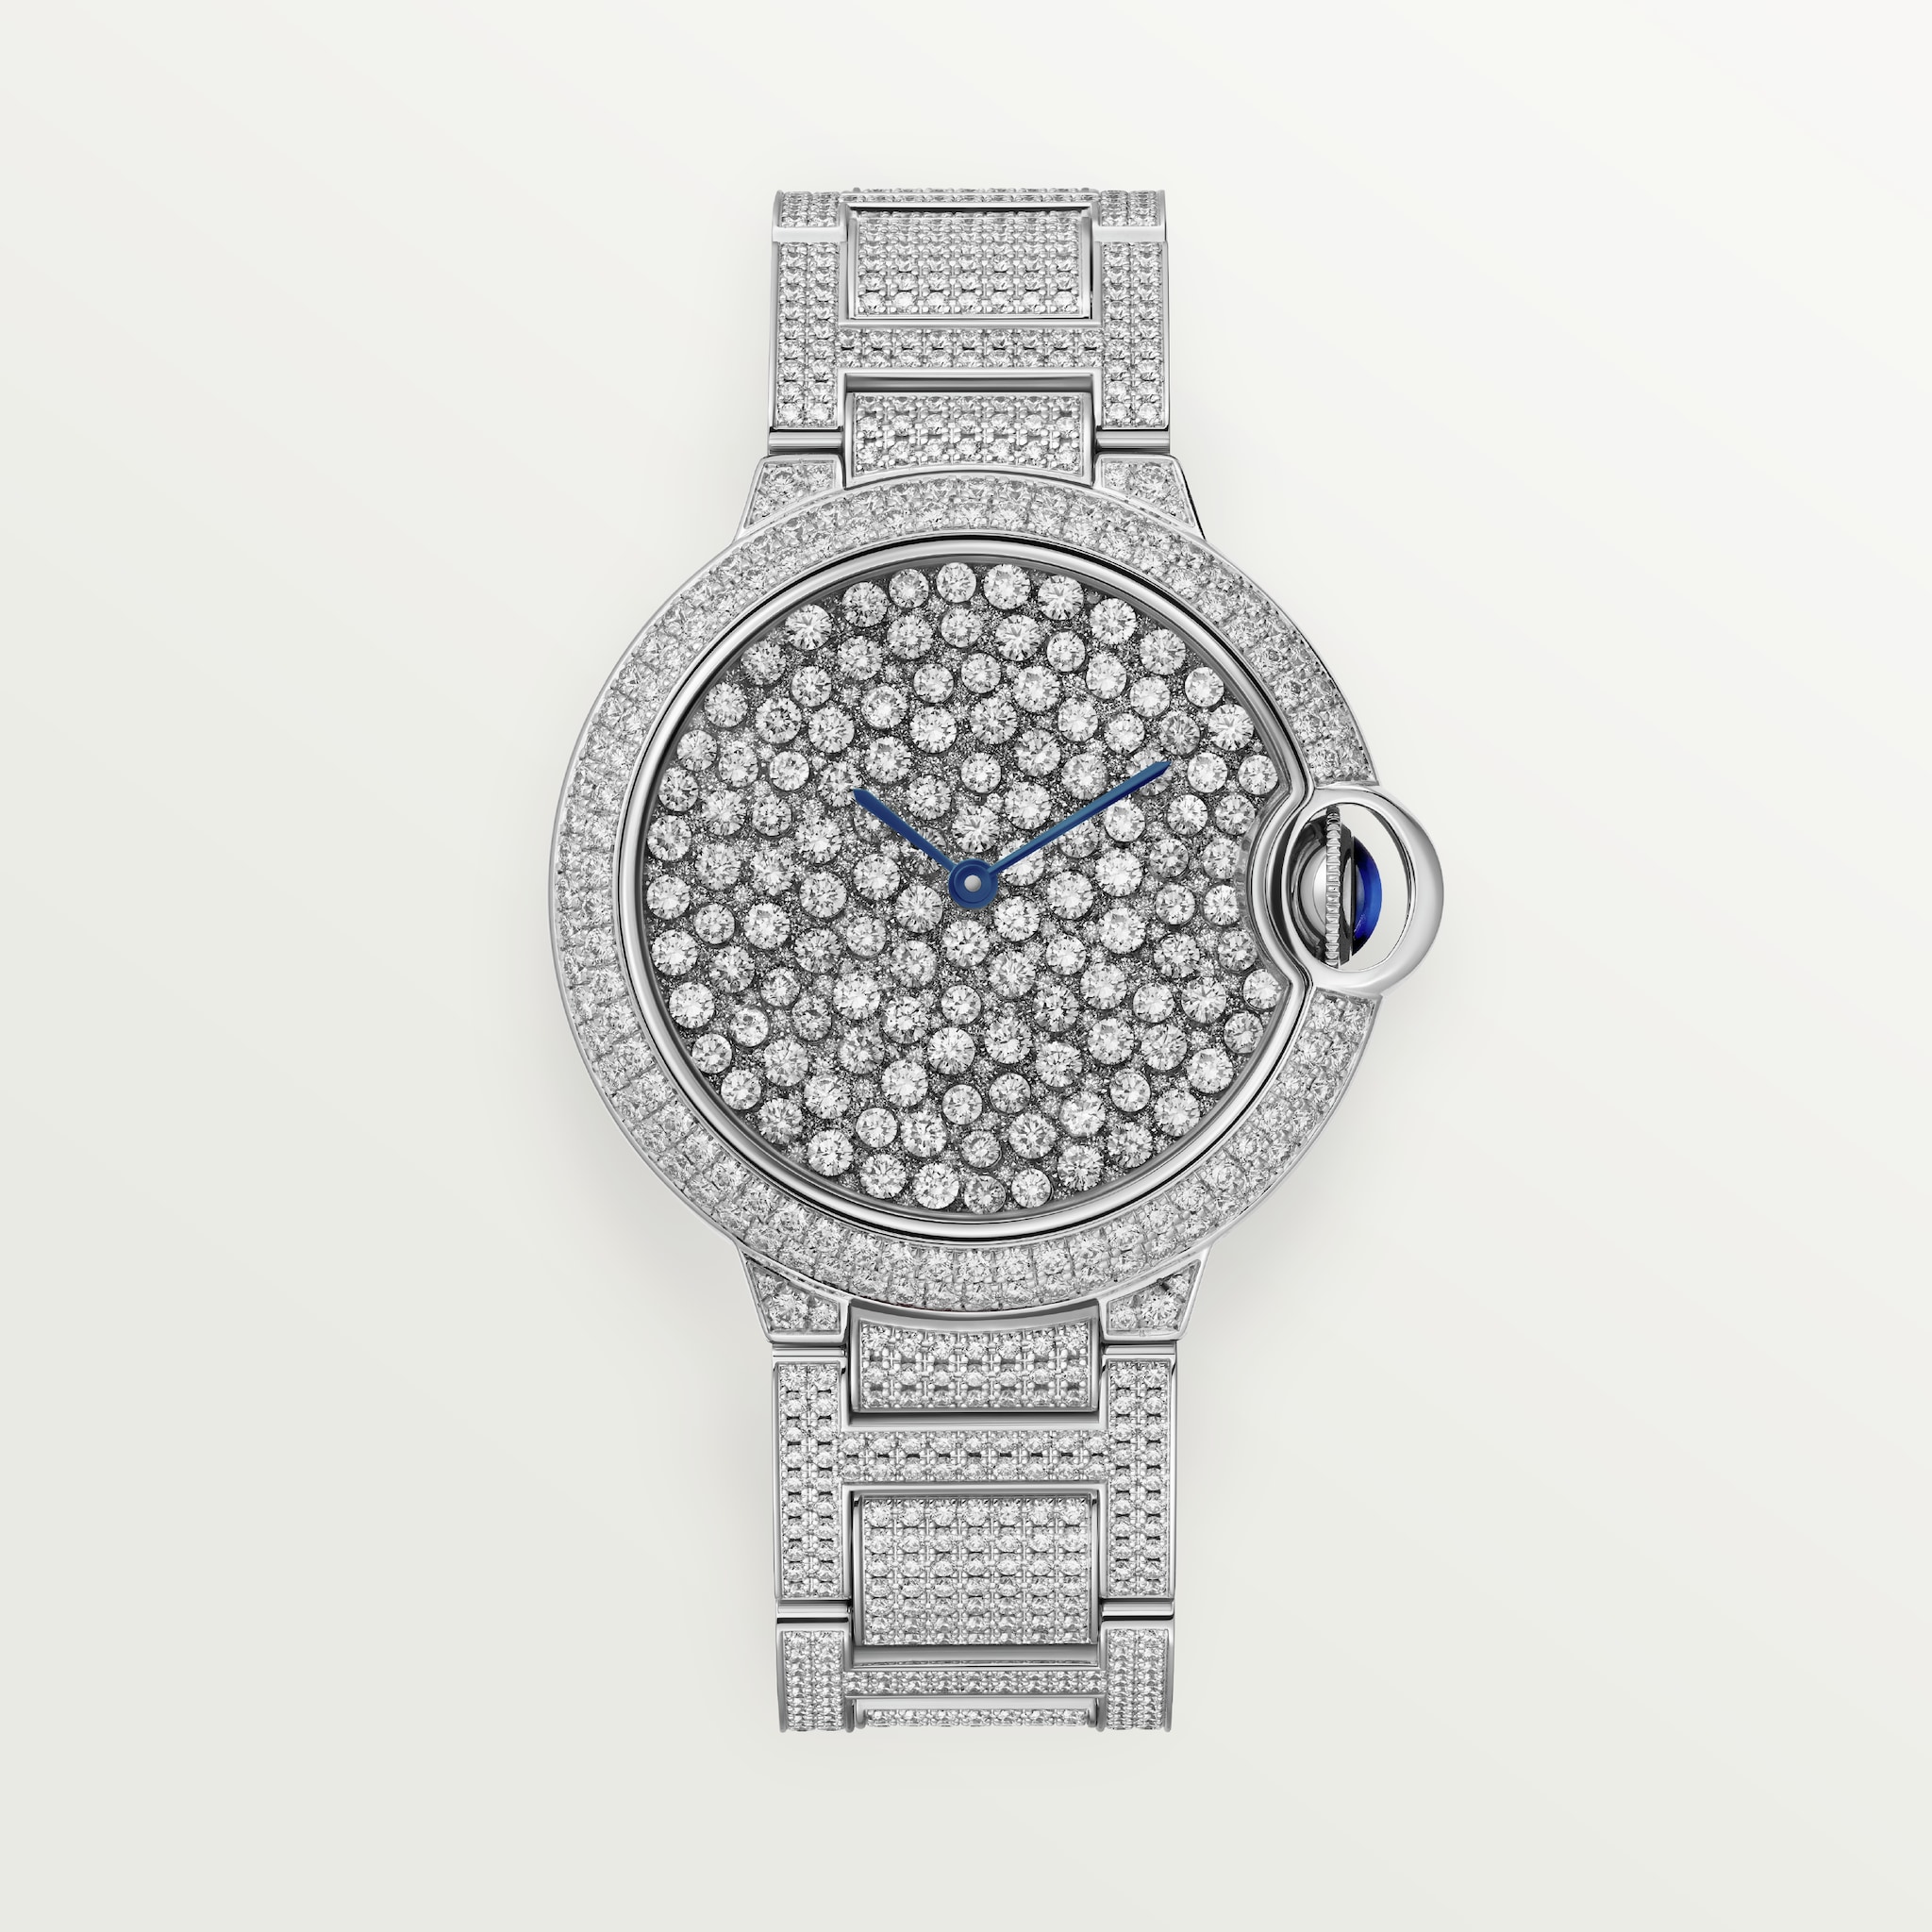 Ballon Bleu de Cartier watch37 mm, automatic mechanical movement, white gold, diamonds, metal bracelet